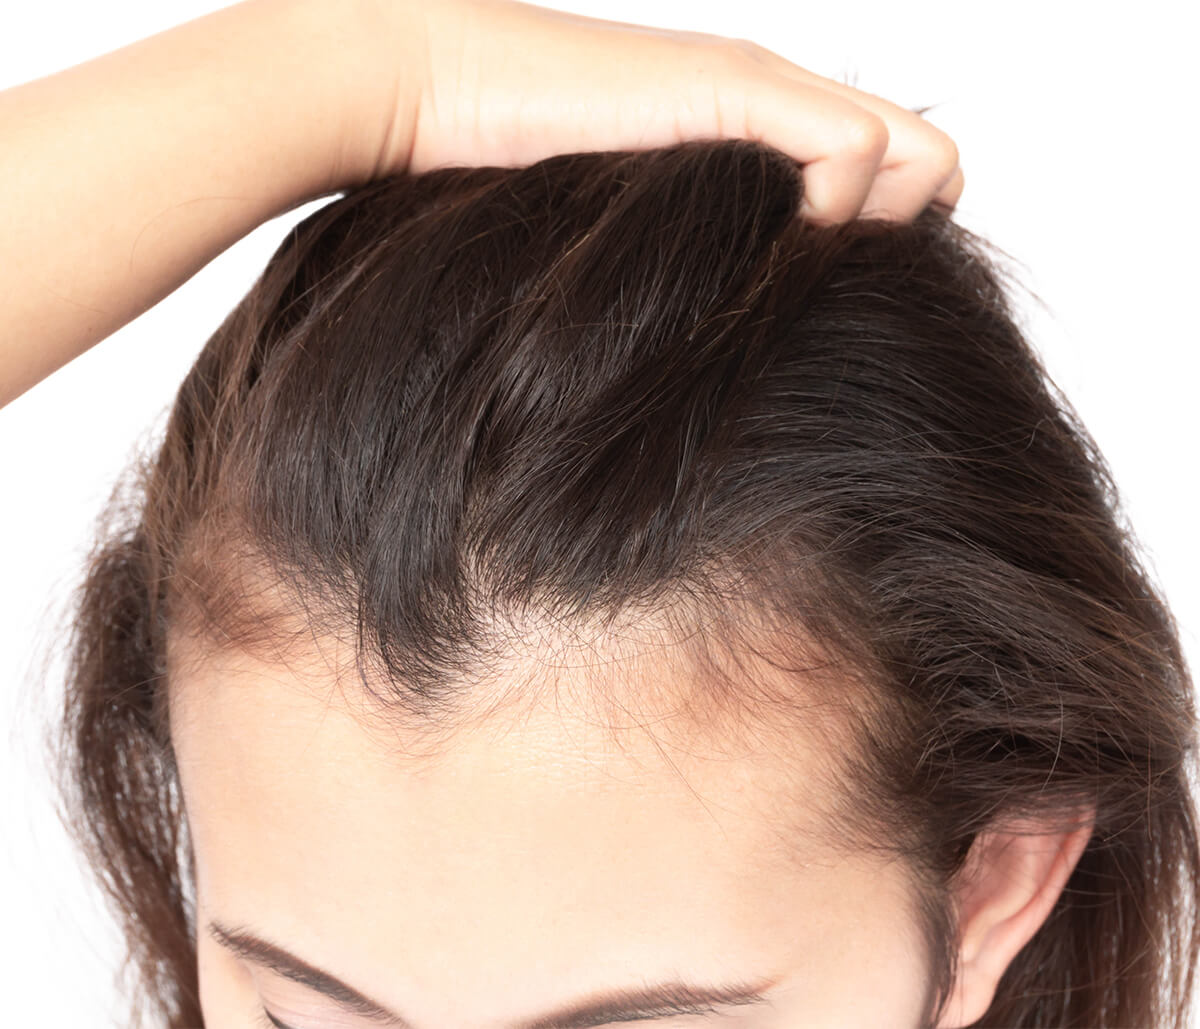 Dermatologist for Hair Loss in Washington Area